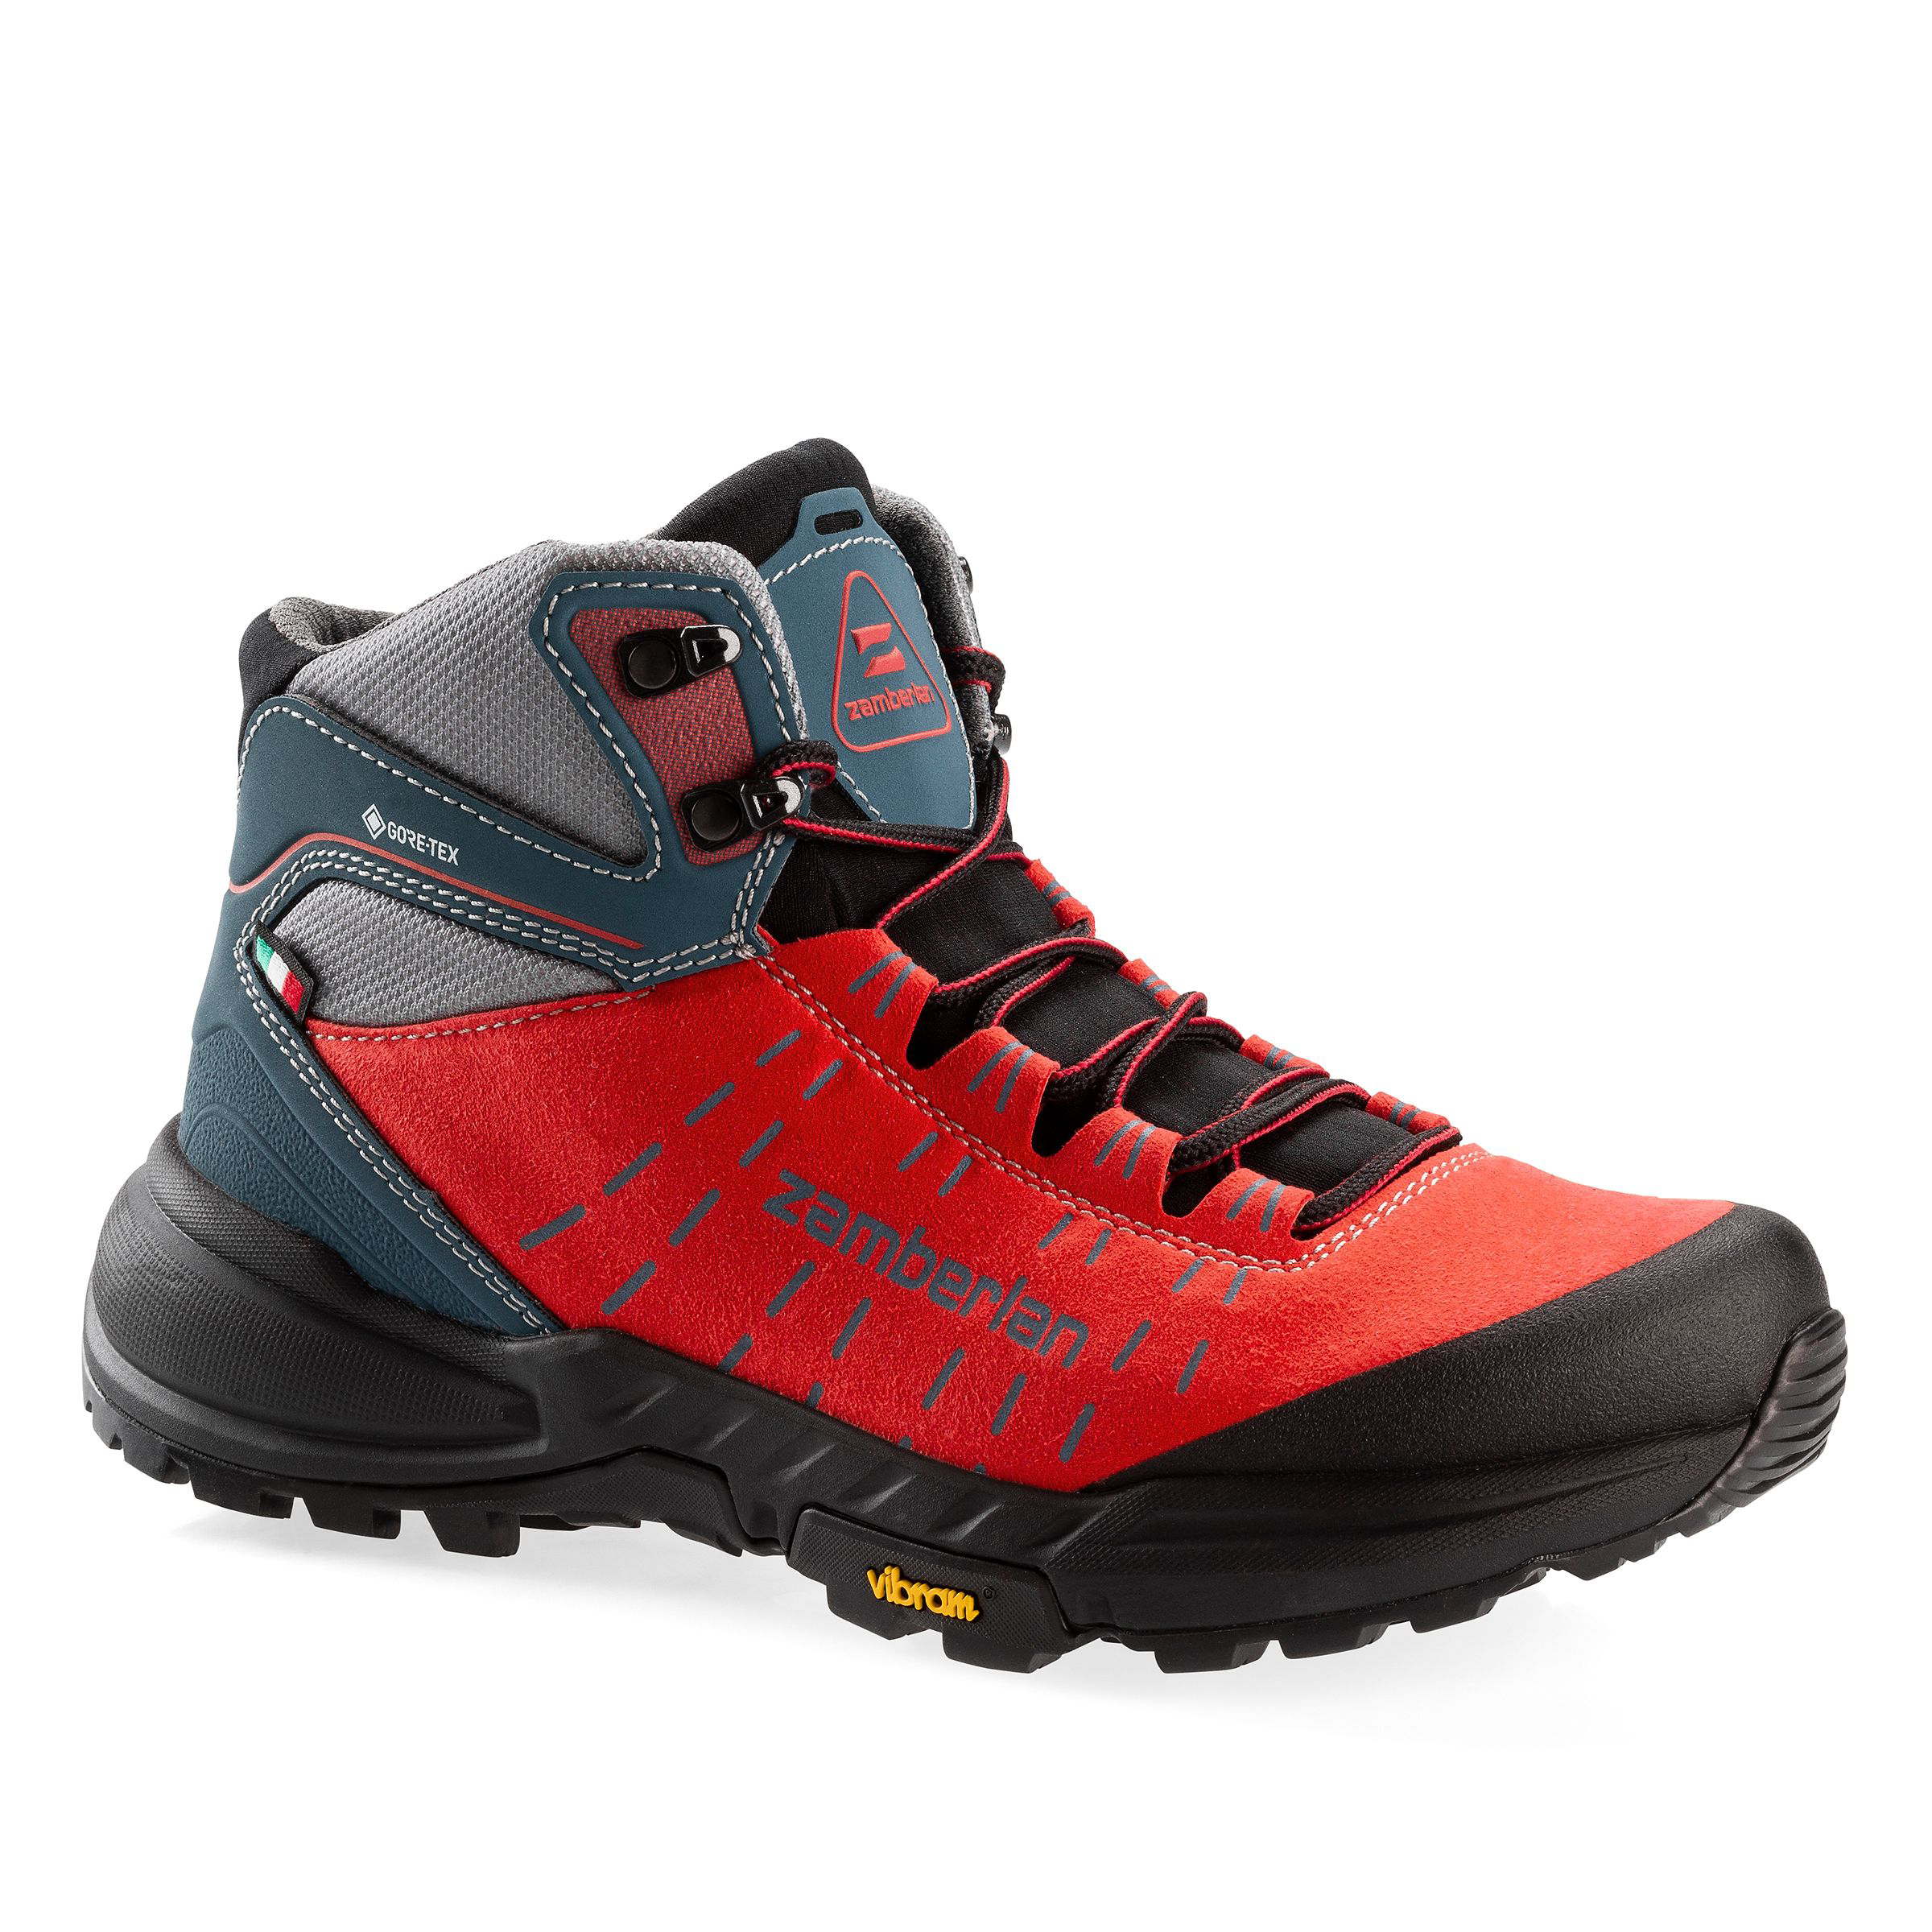 Zamberlan 334 Circe GTX Waterproof Hiking Boots for Ladies - Red - 7.5M